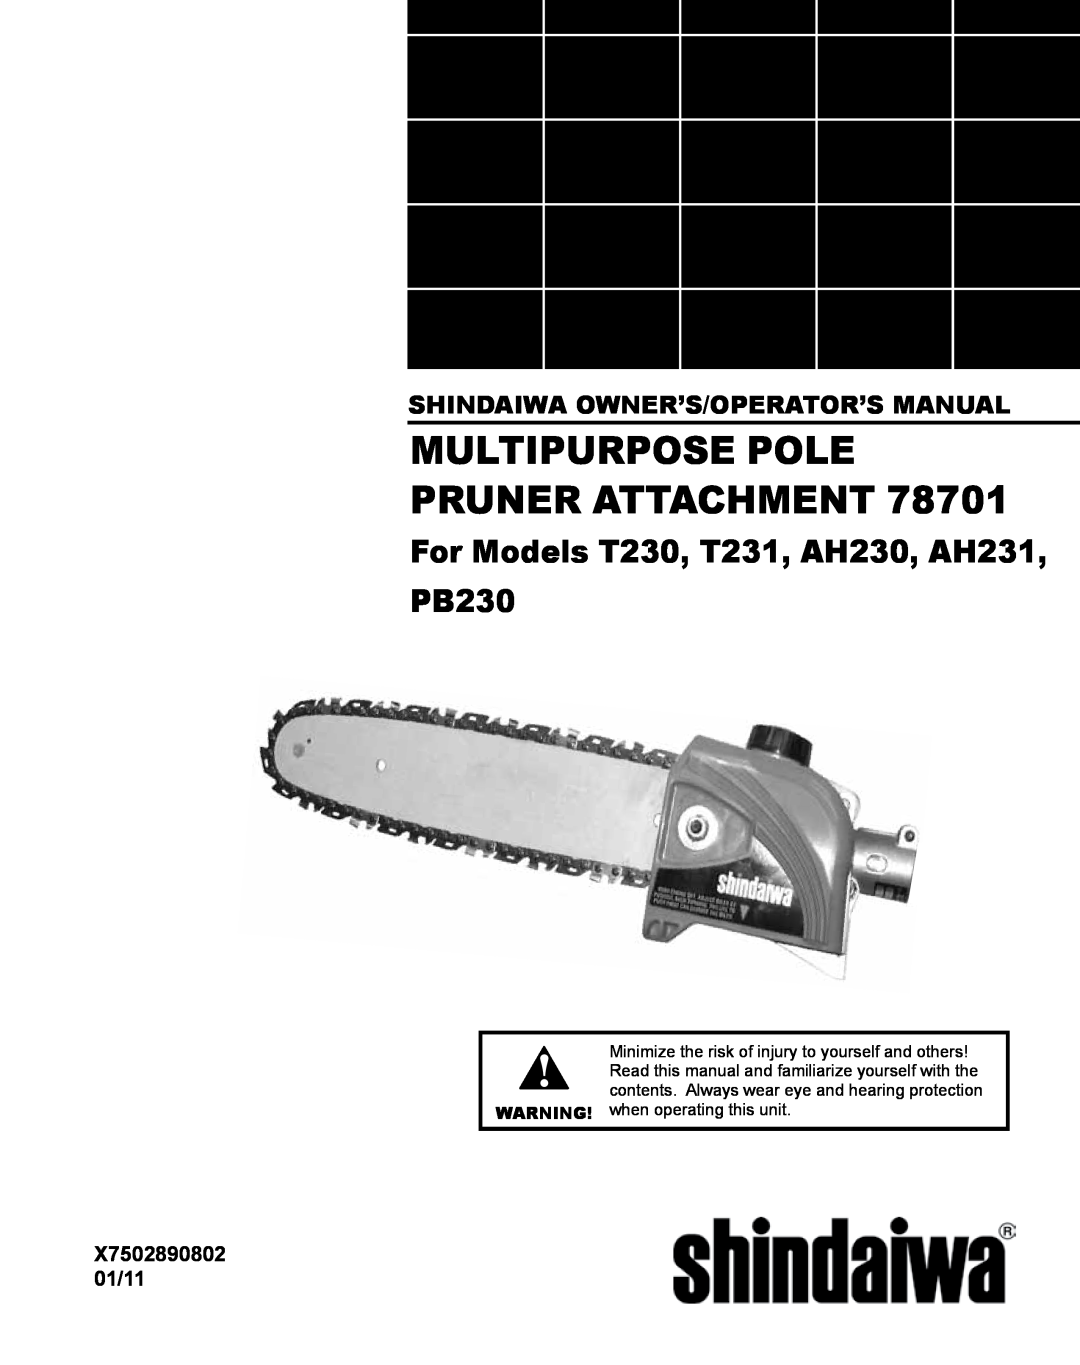 Shindaiwa manual X7502890802 01/11, Multipurpose Pole Pruner Attachment, For Models T230, T231, AH230, AH231, PB230 